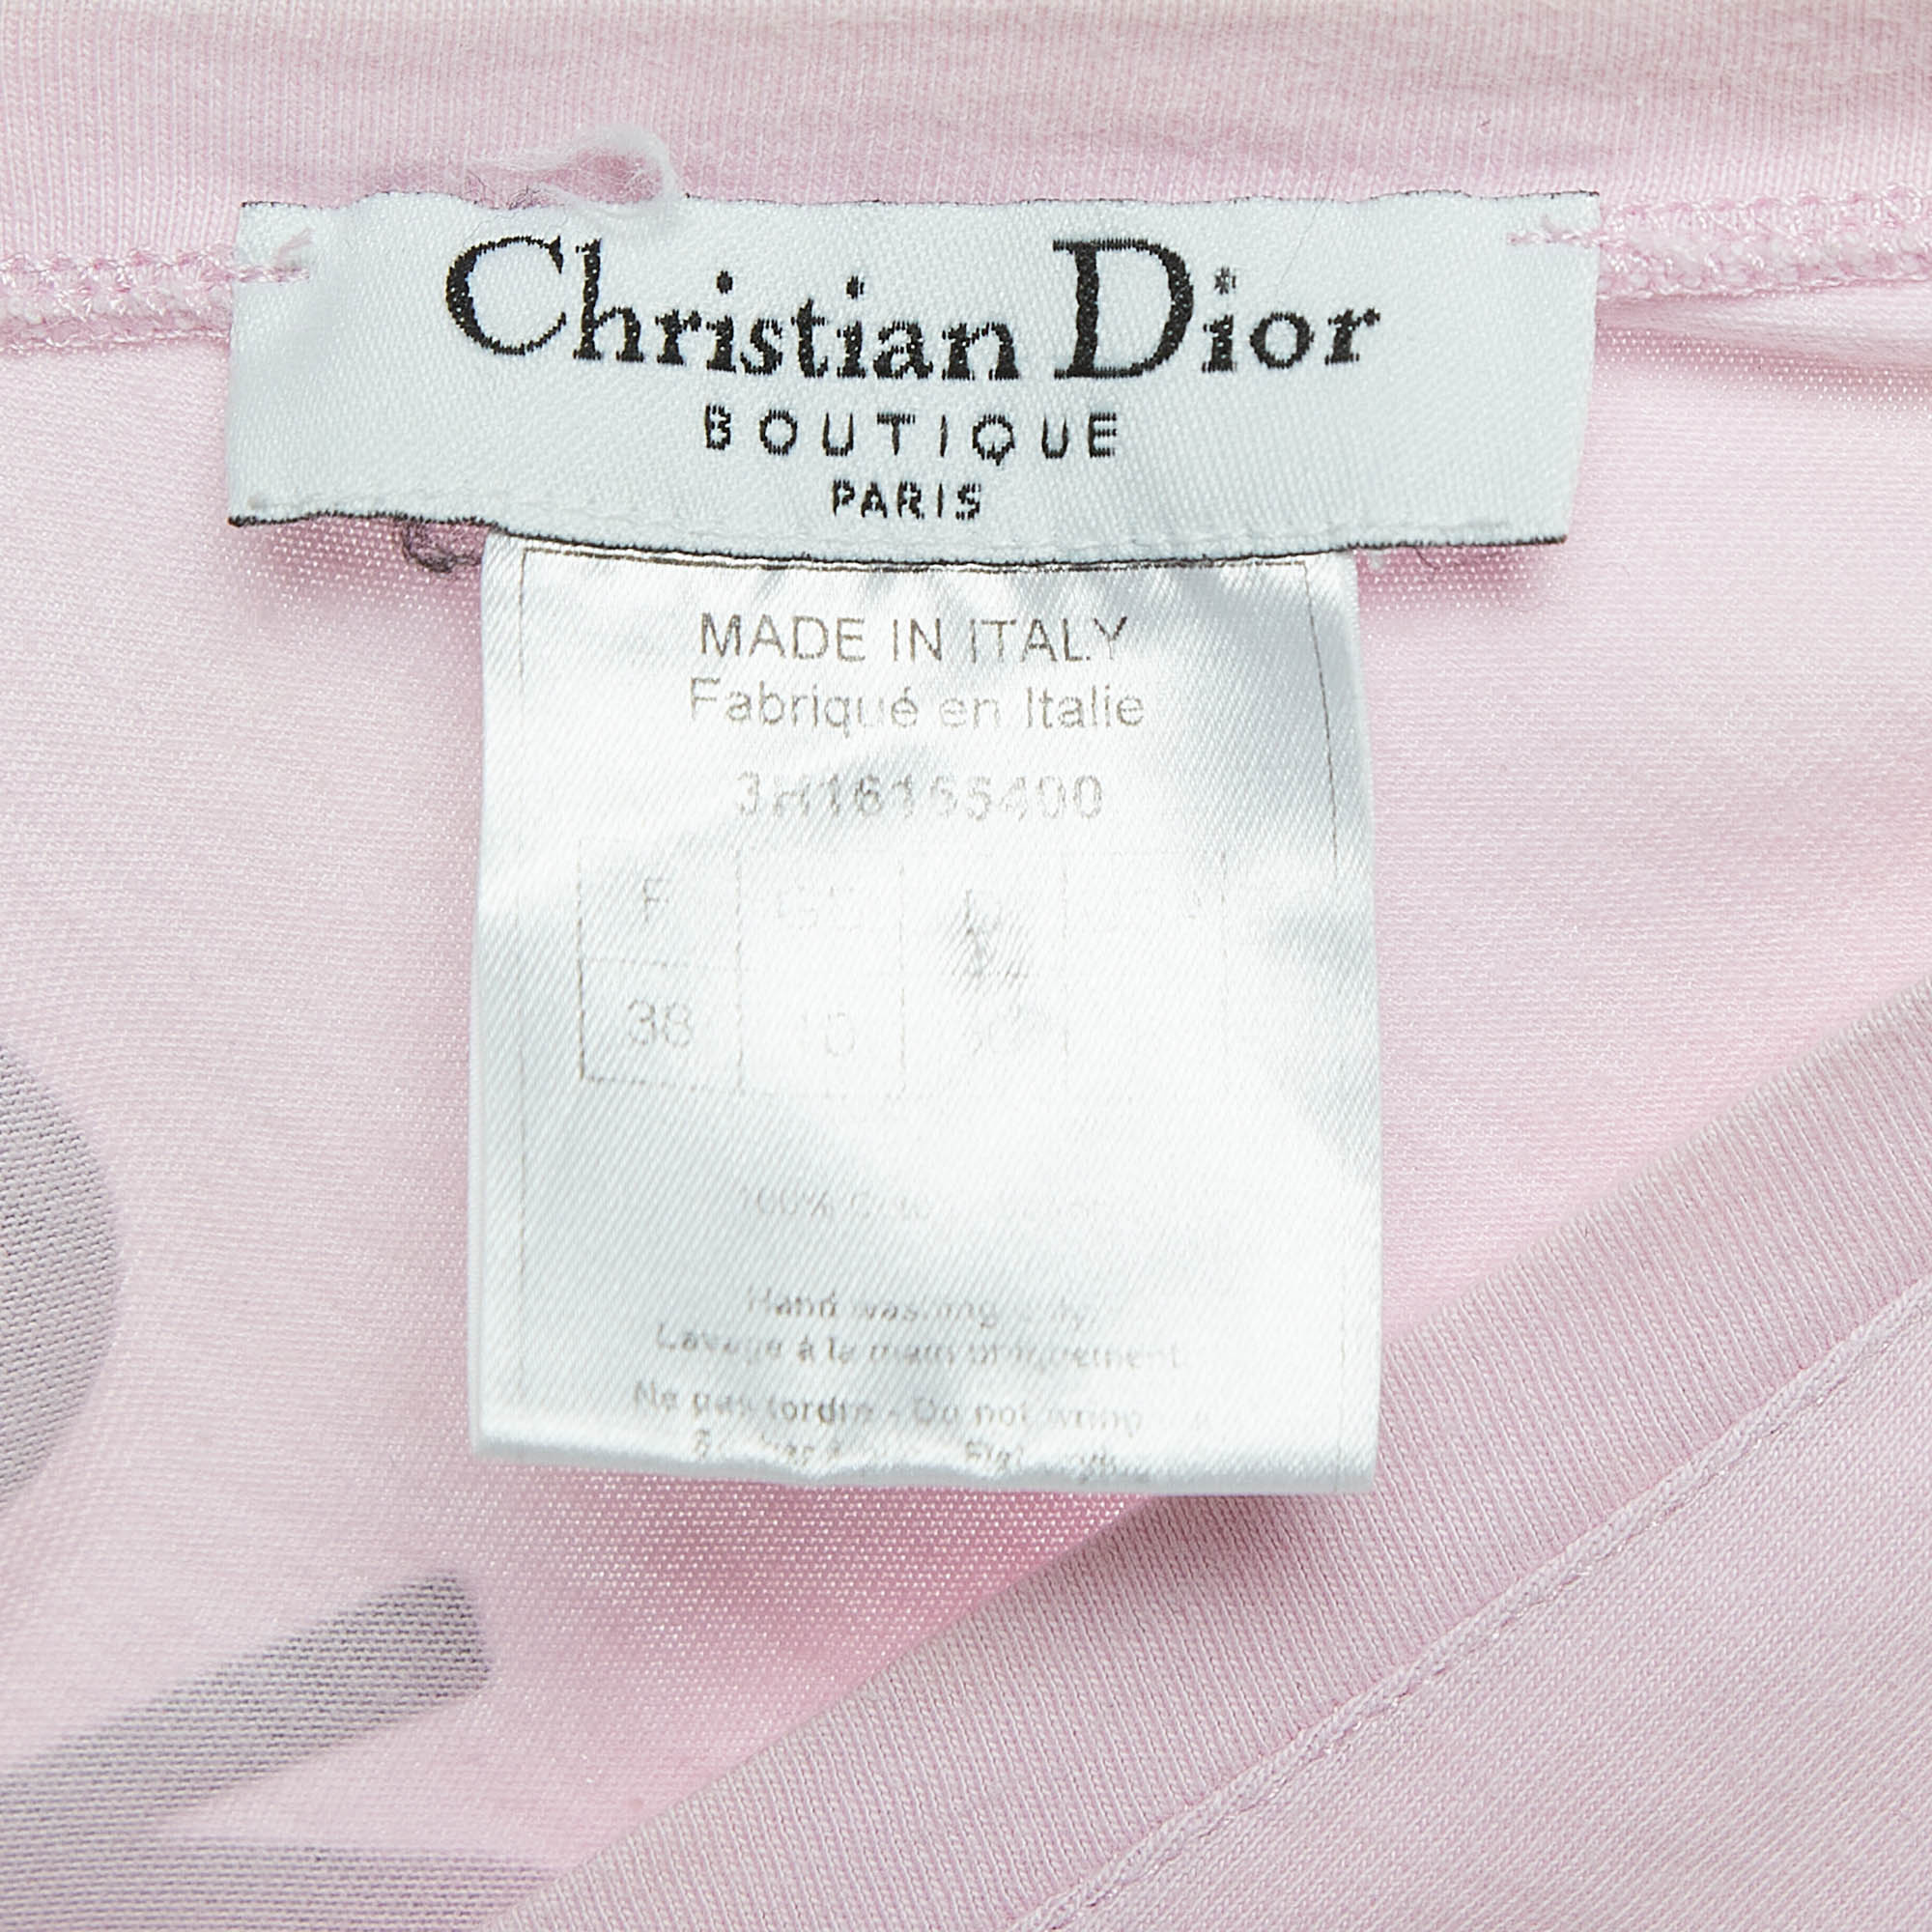 Dior Vintage Logo Patch Cotton V-Neck T-Shirt M